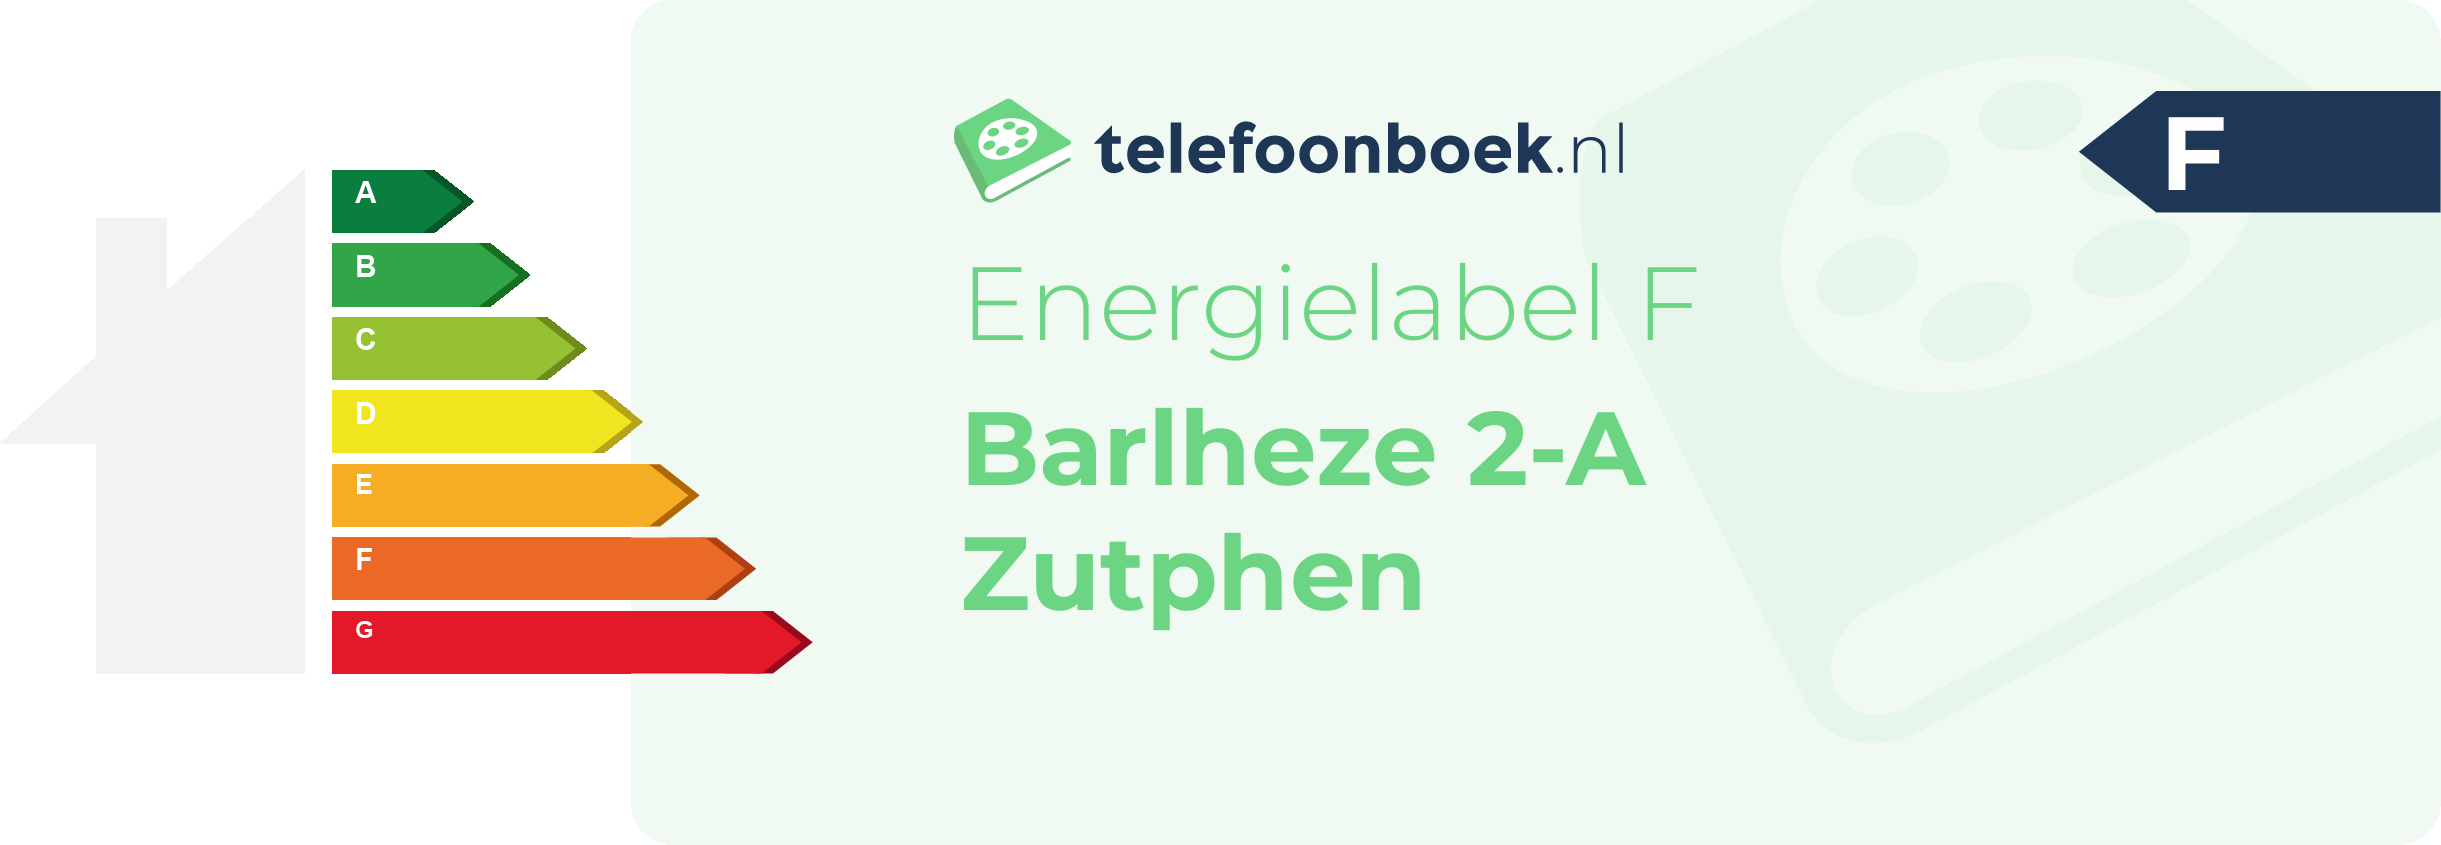 Energielabel Barlheze 2-A Zutphen